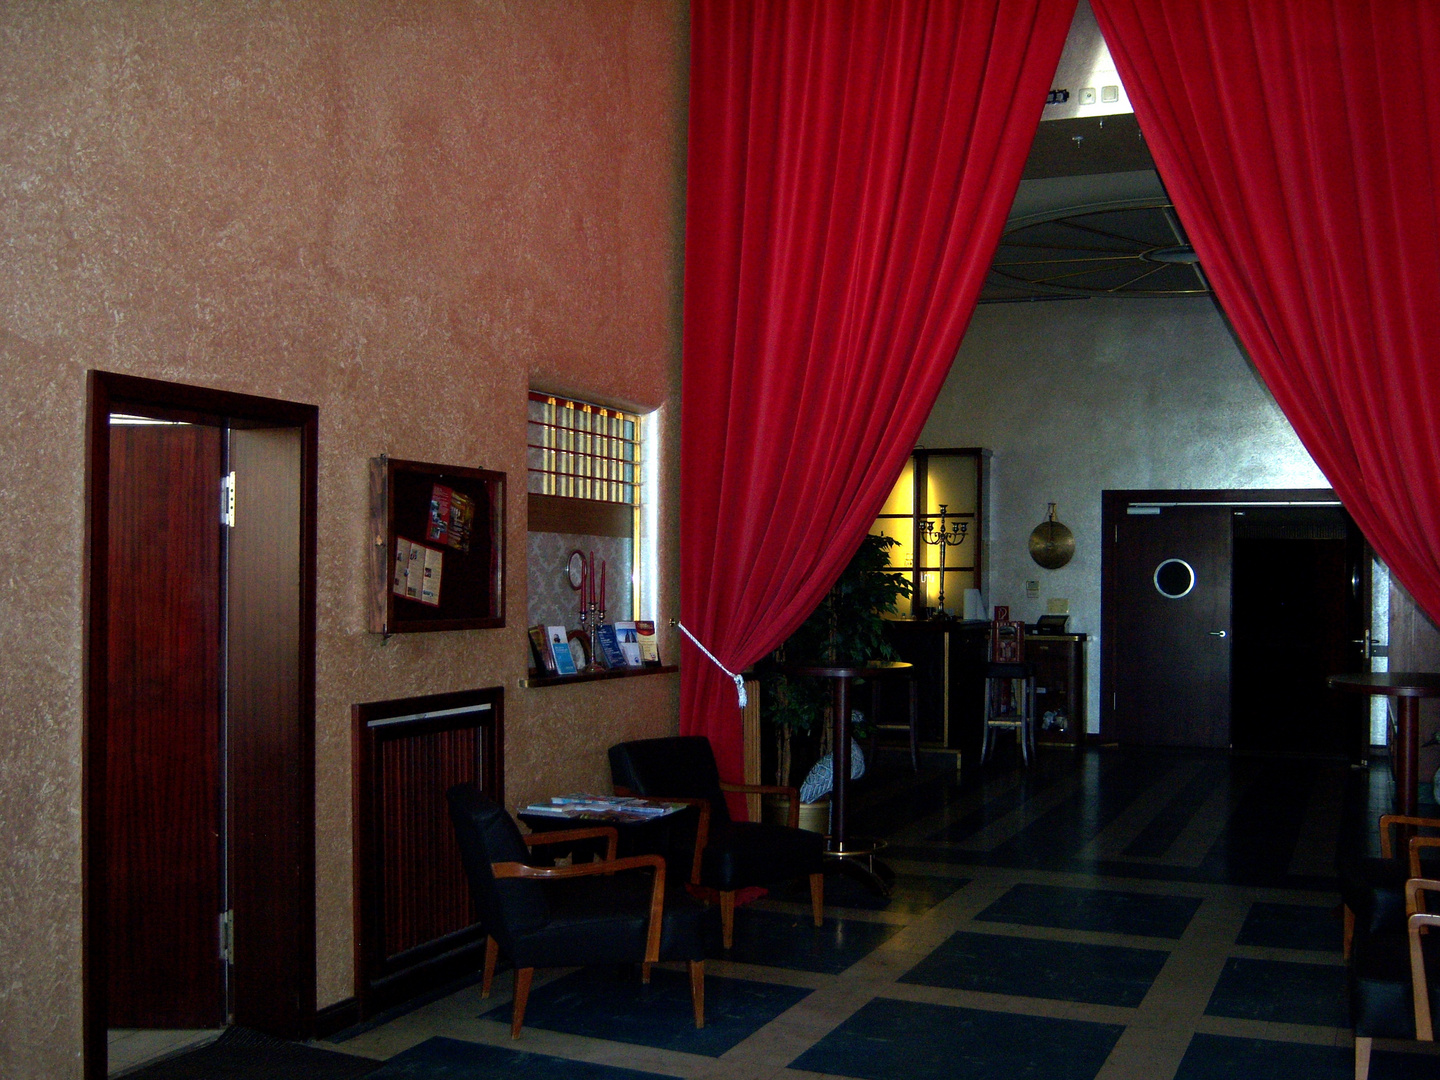 Das Foyer